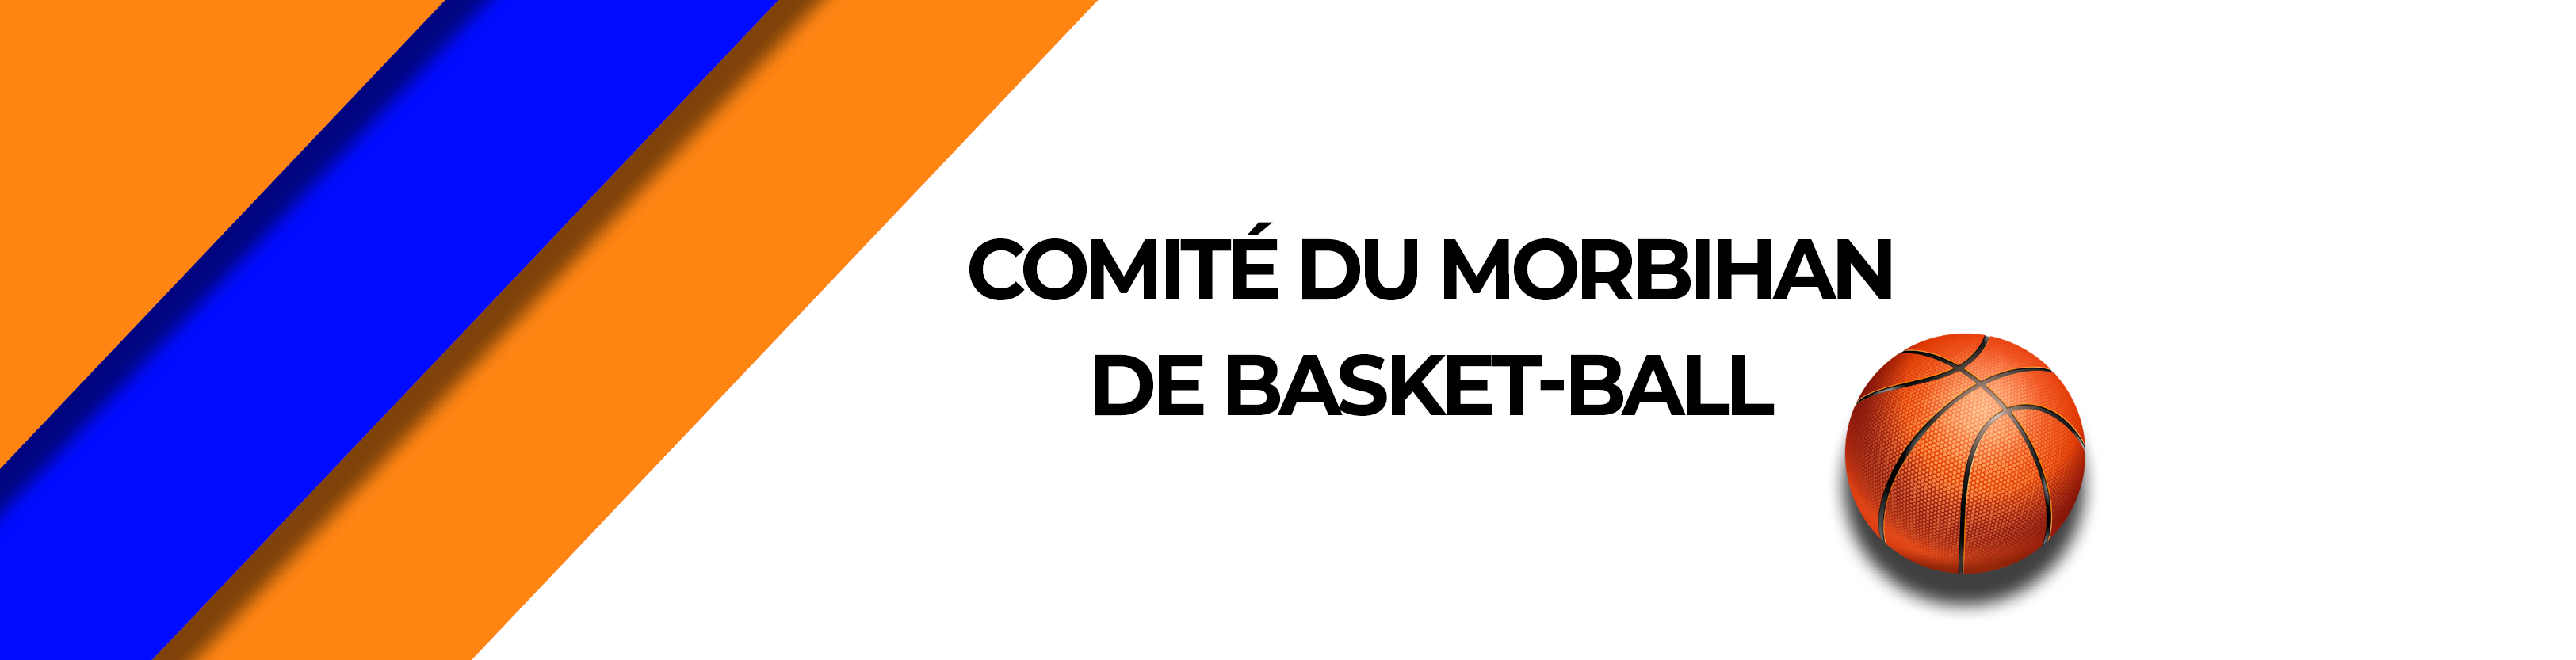 Bannière COMITE DU MORBIHAN DE BASKET-BALL